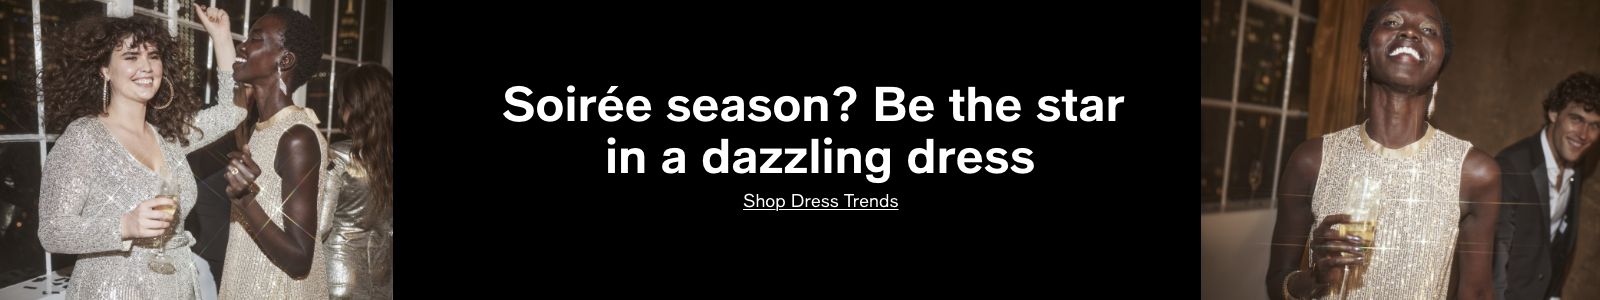 Soiree season? Be the star in a dazzling dress, Shop Dress Trends